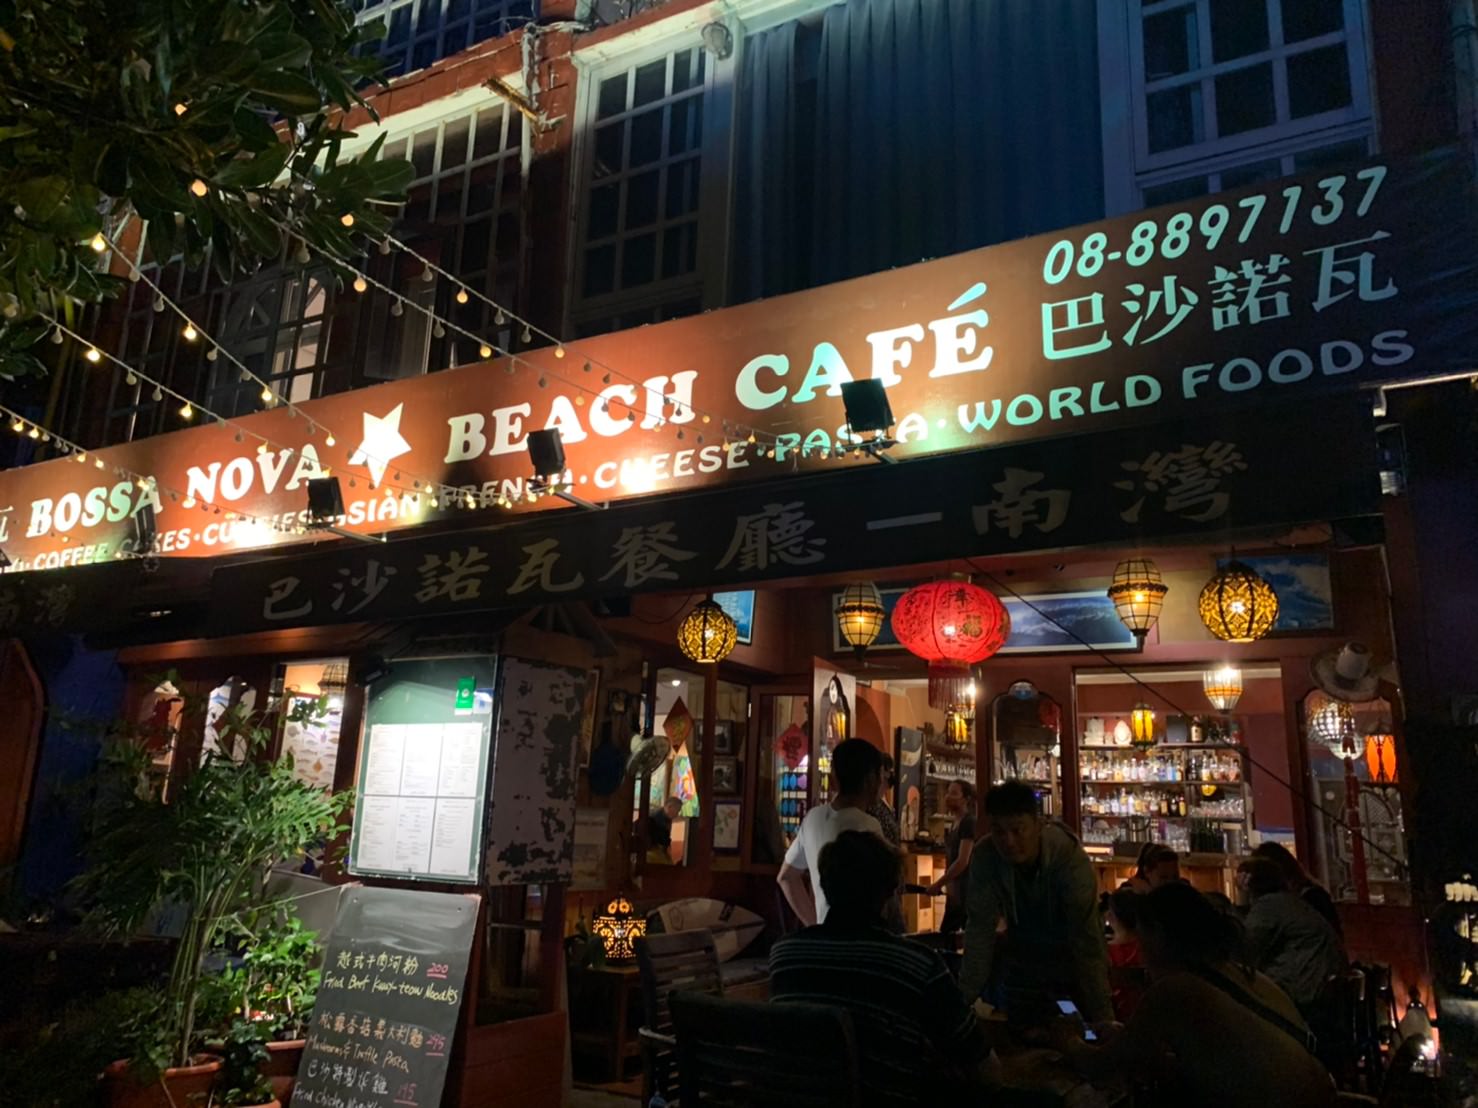 BOSSA NOVA Beach Cafe 南灣巴沙諾瓦小餐館